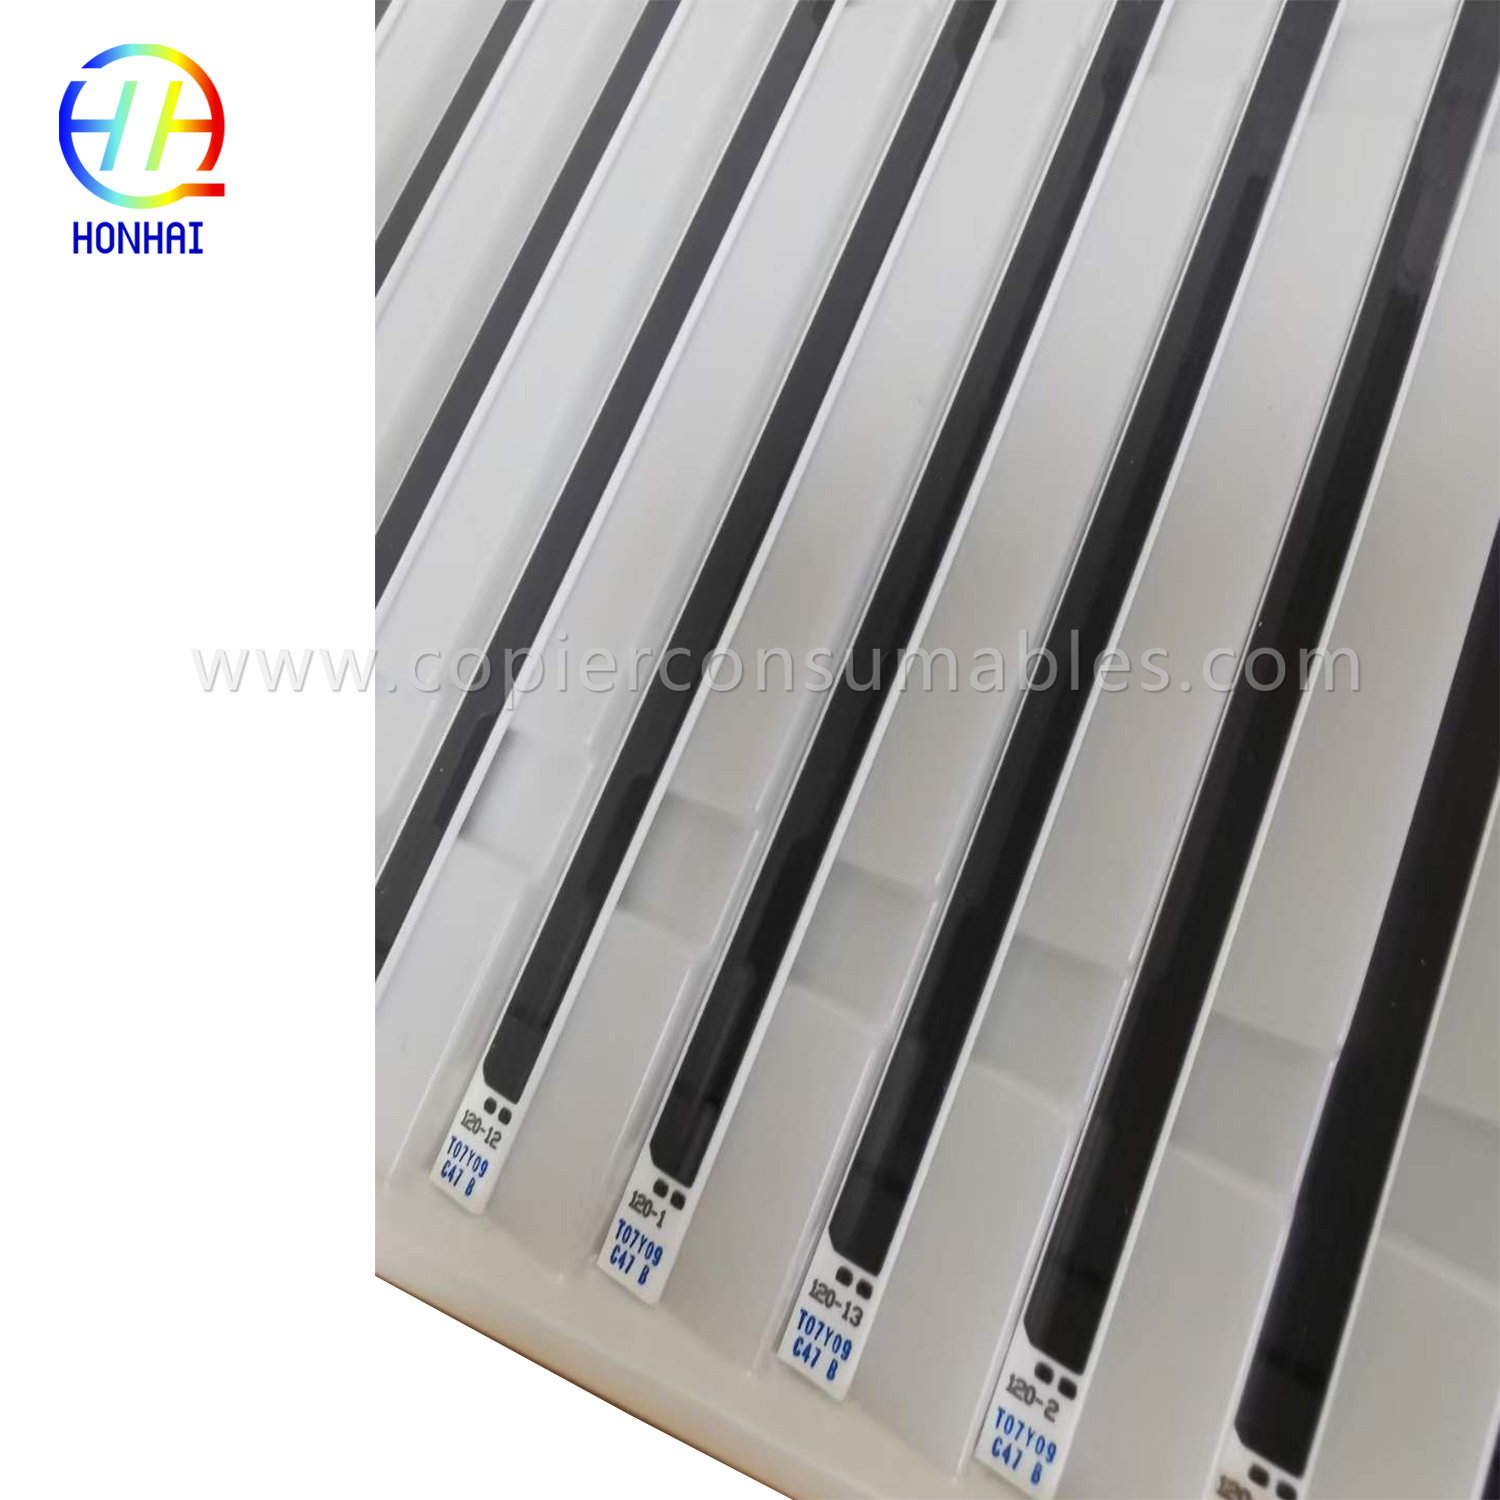 Ceramic Heating Element for HP LaserJet 1010 1012 1015 1018 1020 3015 3020 3030 (RM1-0655-HE) 拷贝